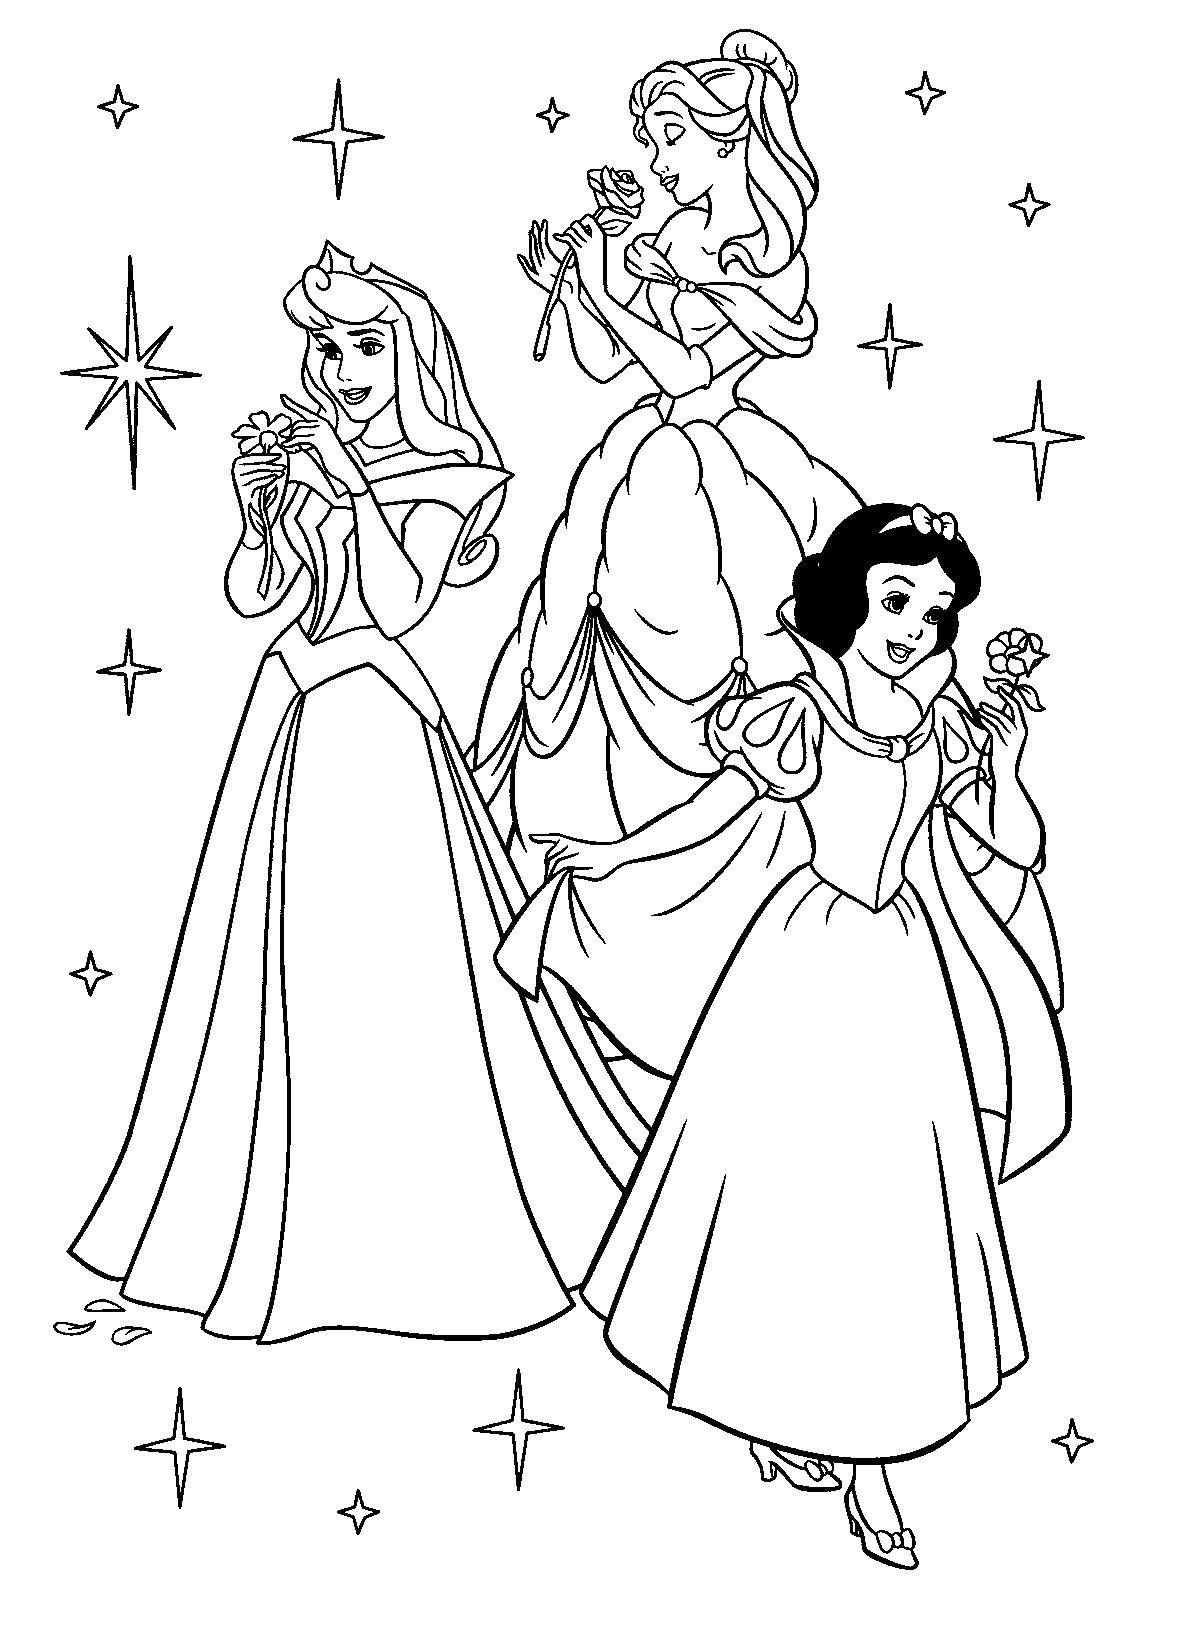 Coloring Three disney princesses. Category Disney coloring pages. Tags:  Princess, Disney.